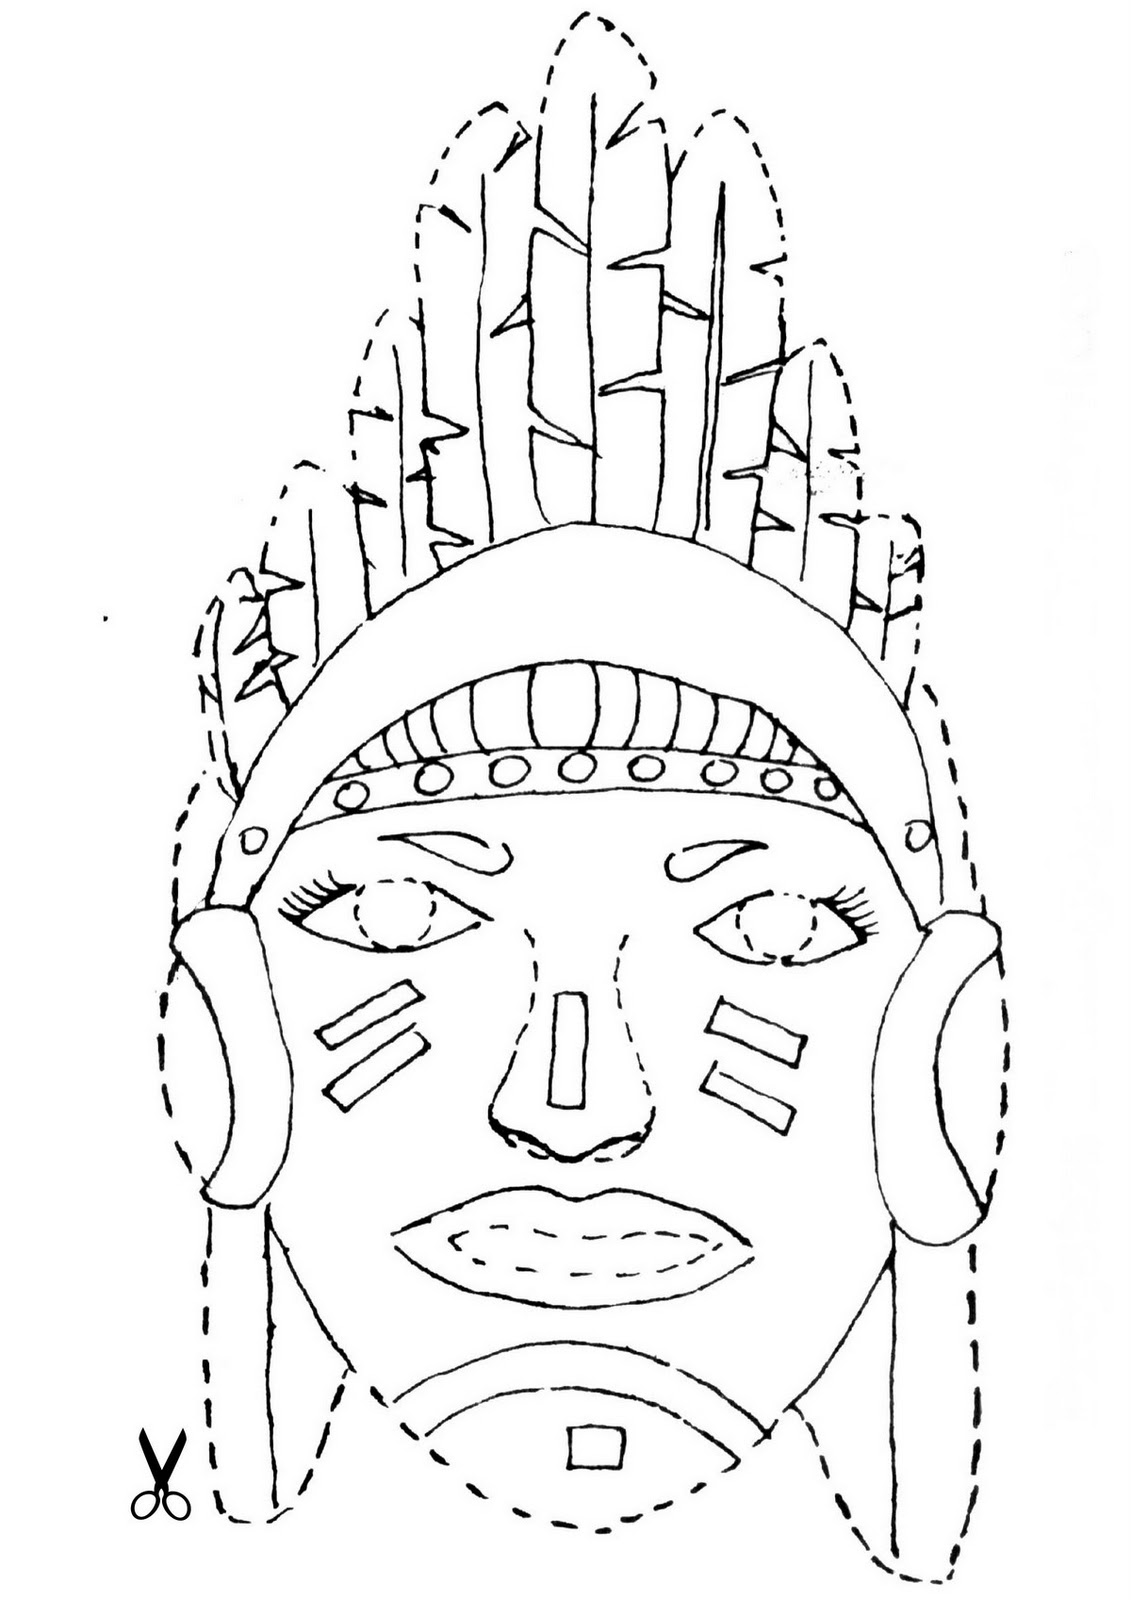 14 Máscaras de Índio Para Imprimir - Blog Cantinho Alternativo